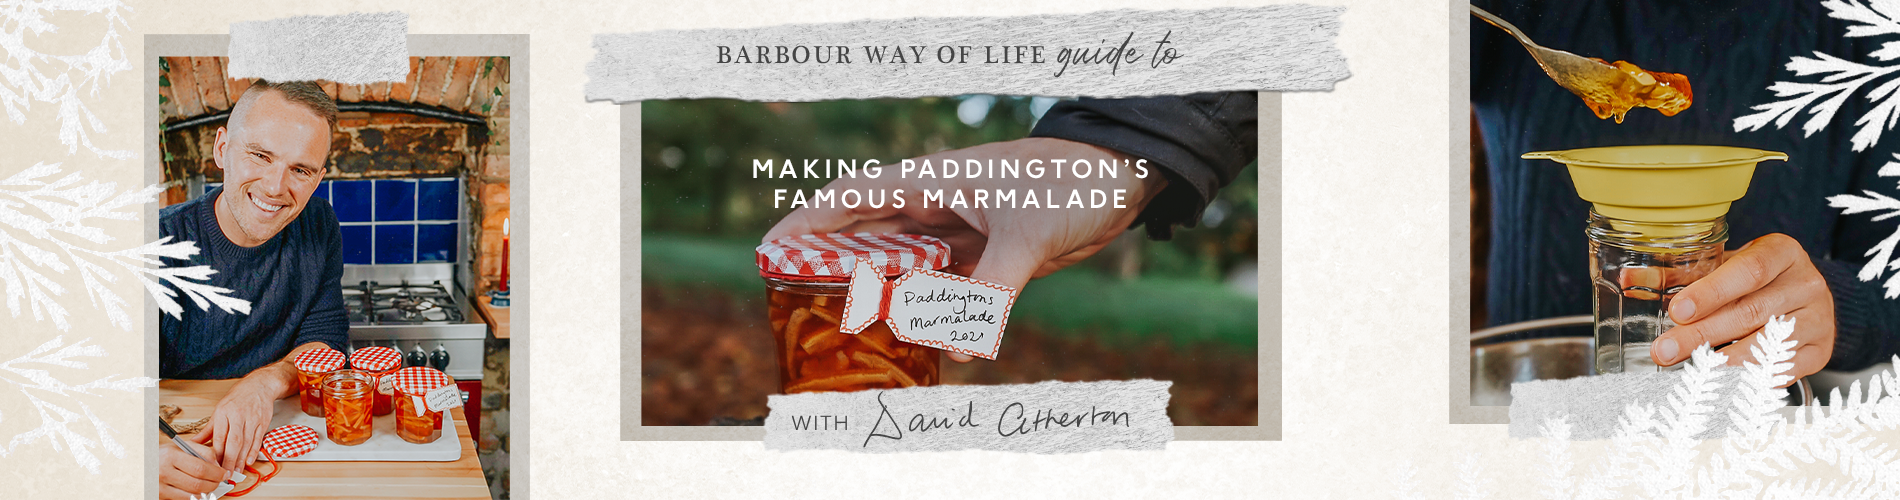 How to Make Paddington’s Marmalade